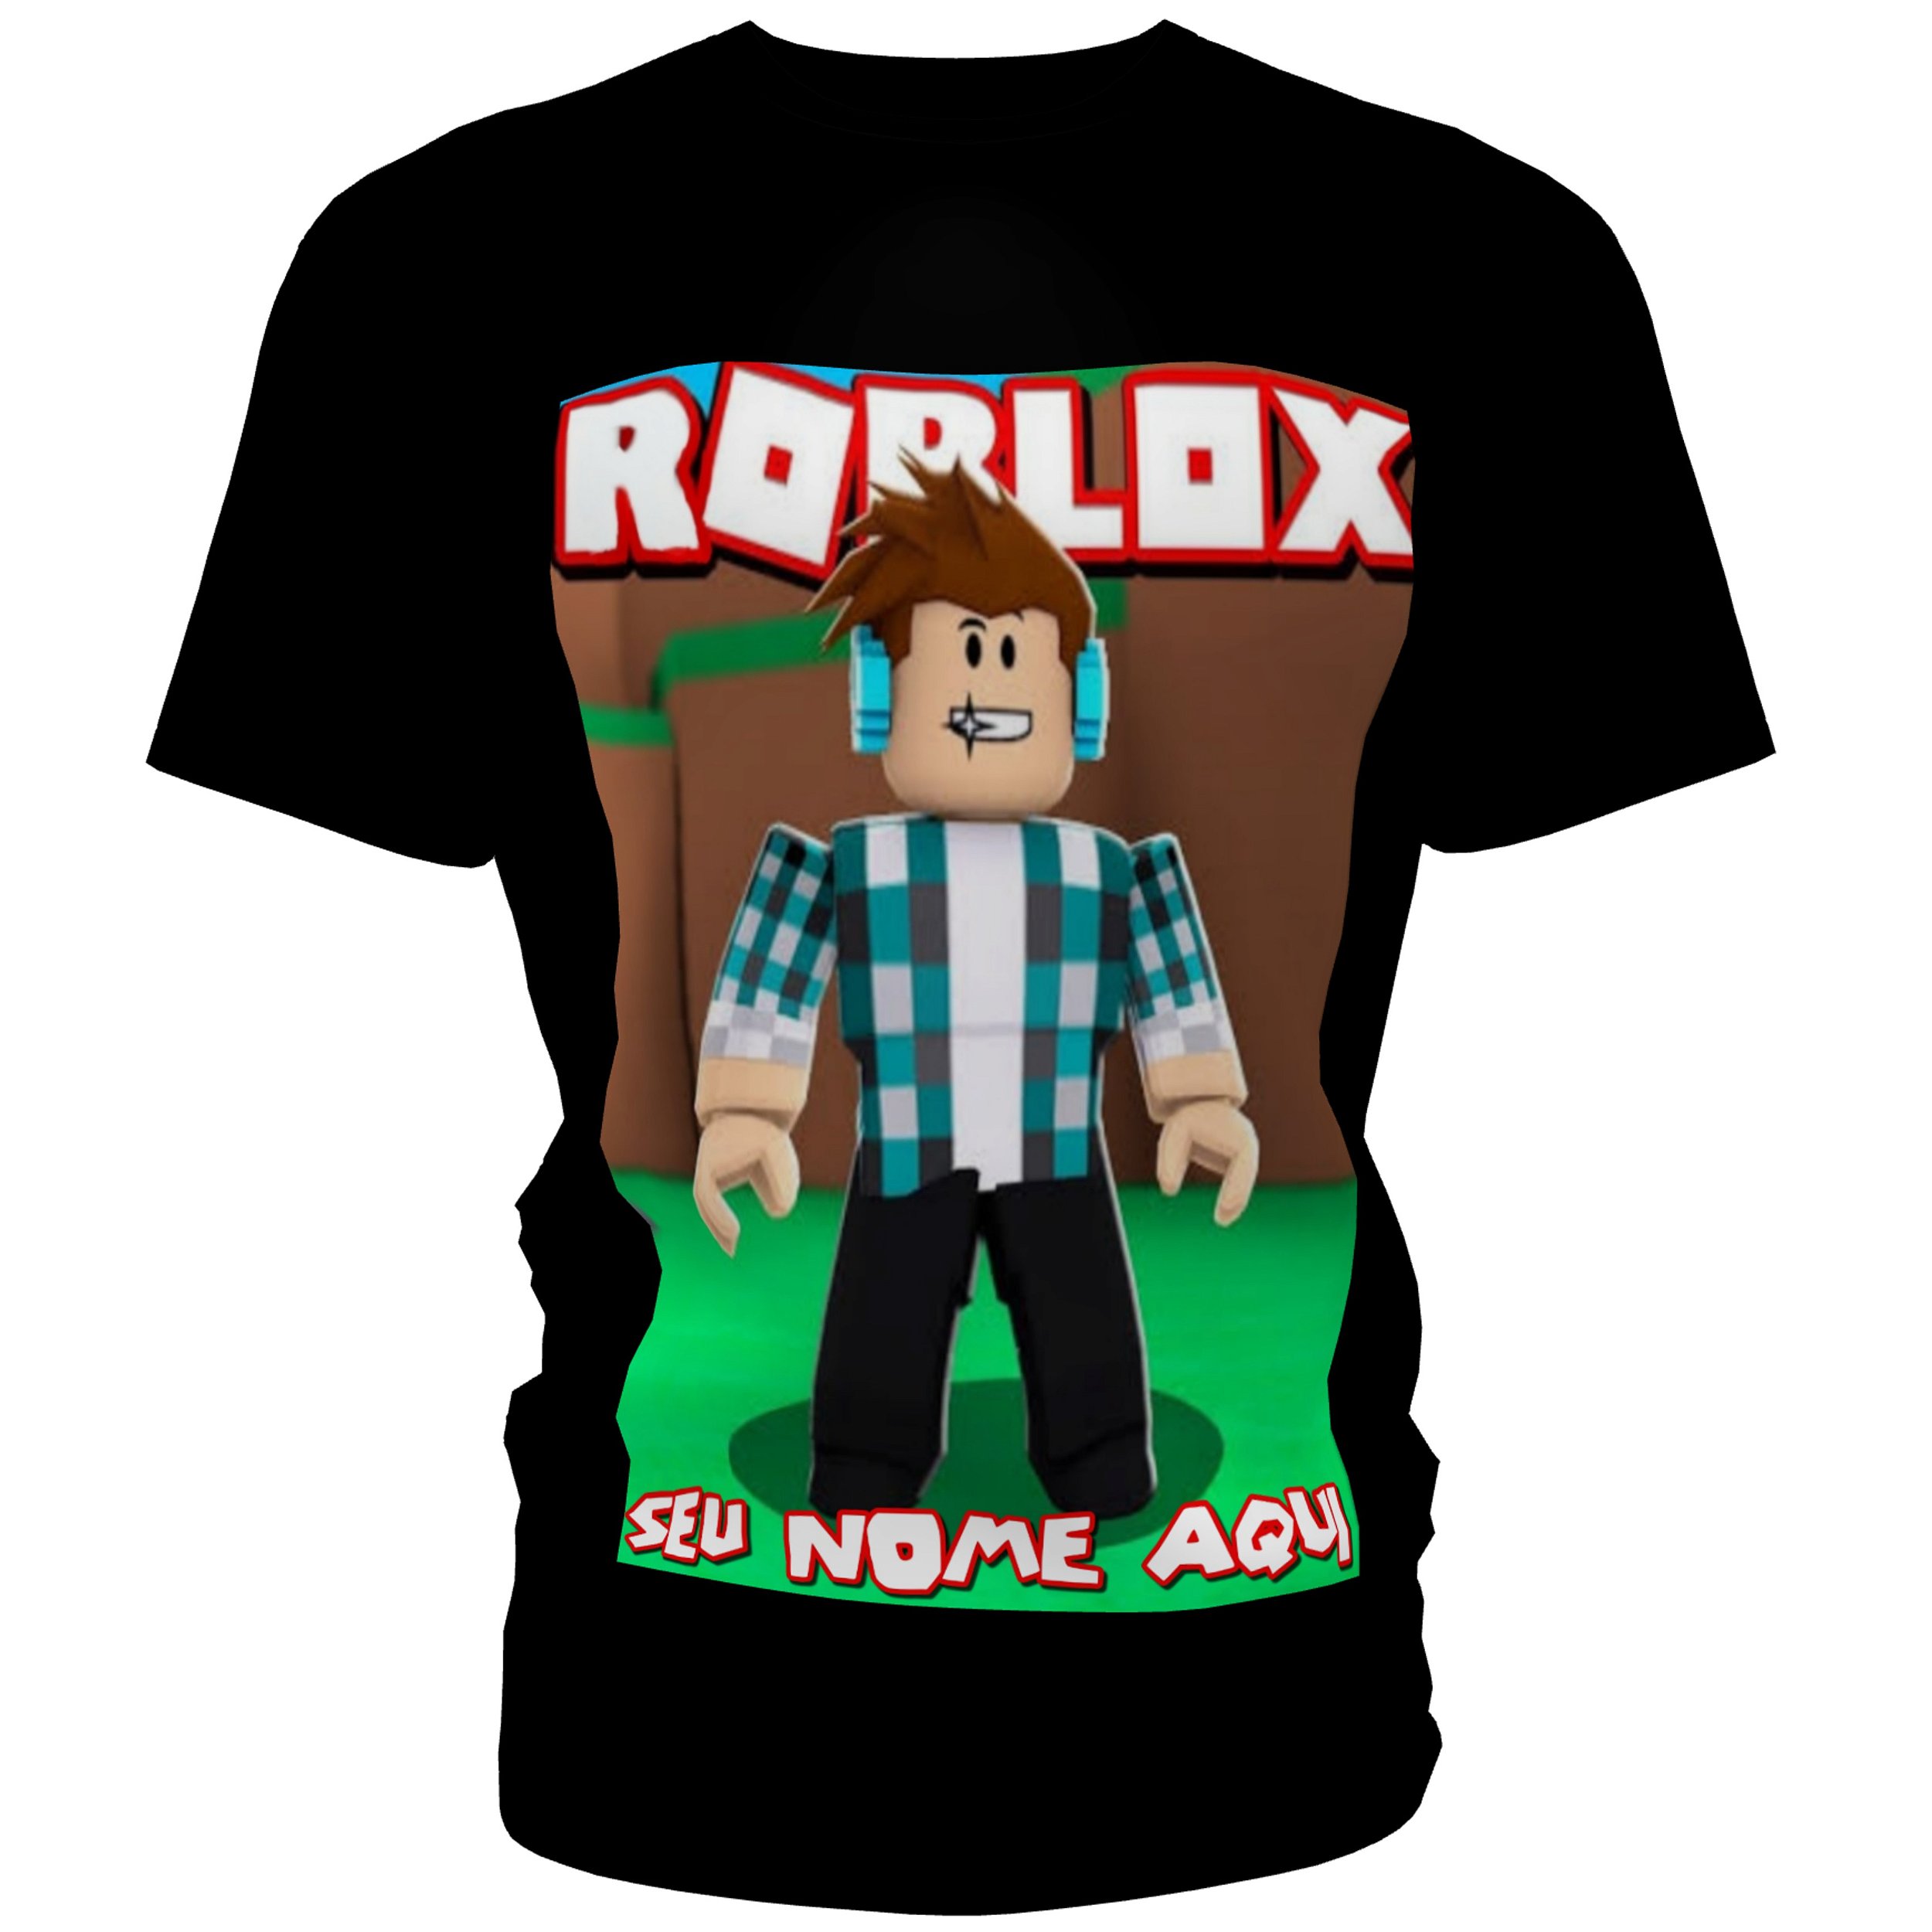 Camiseta Roblox Masculino